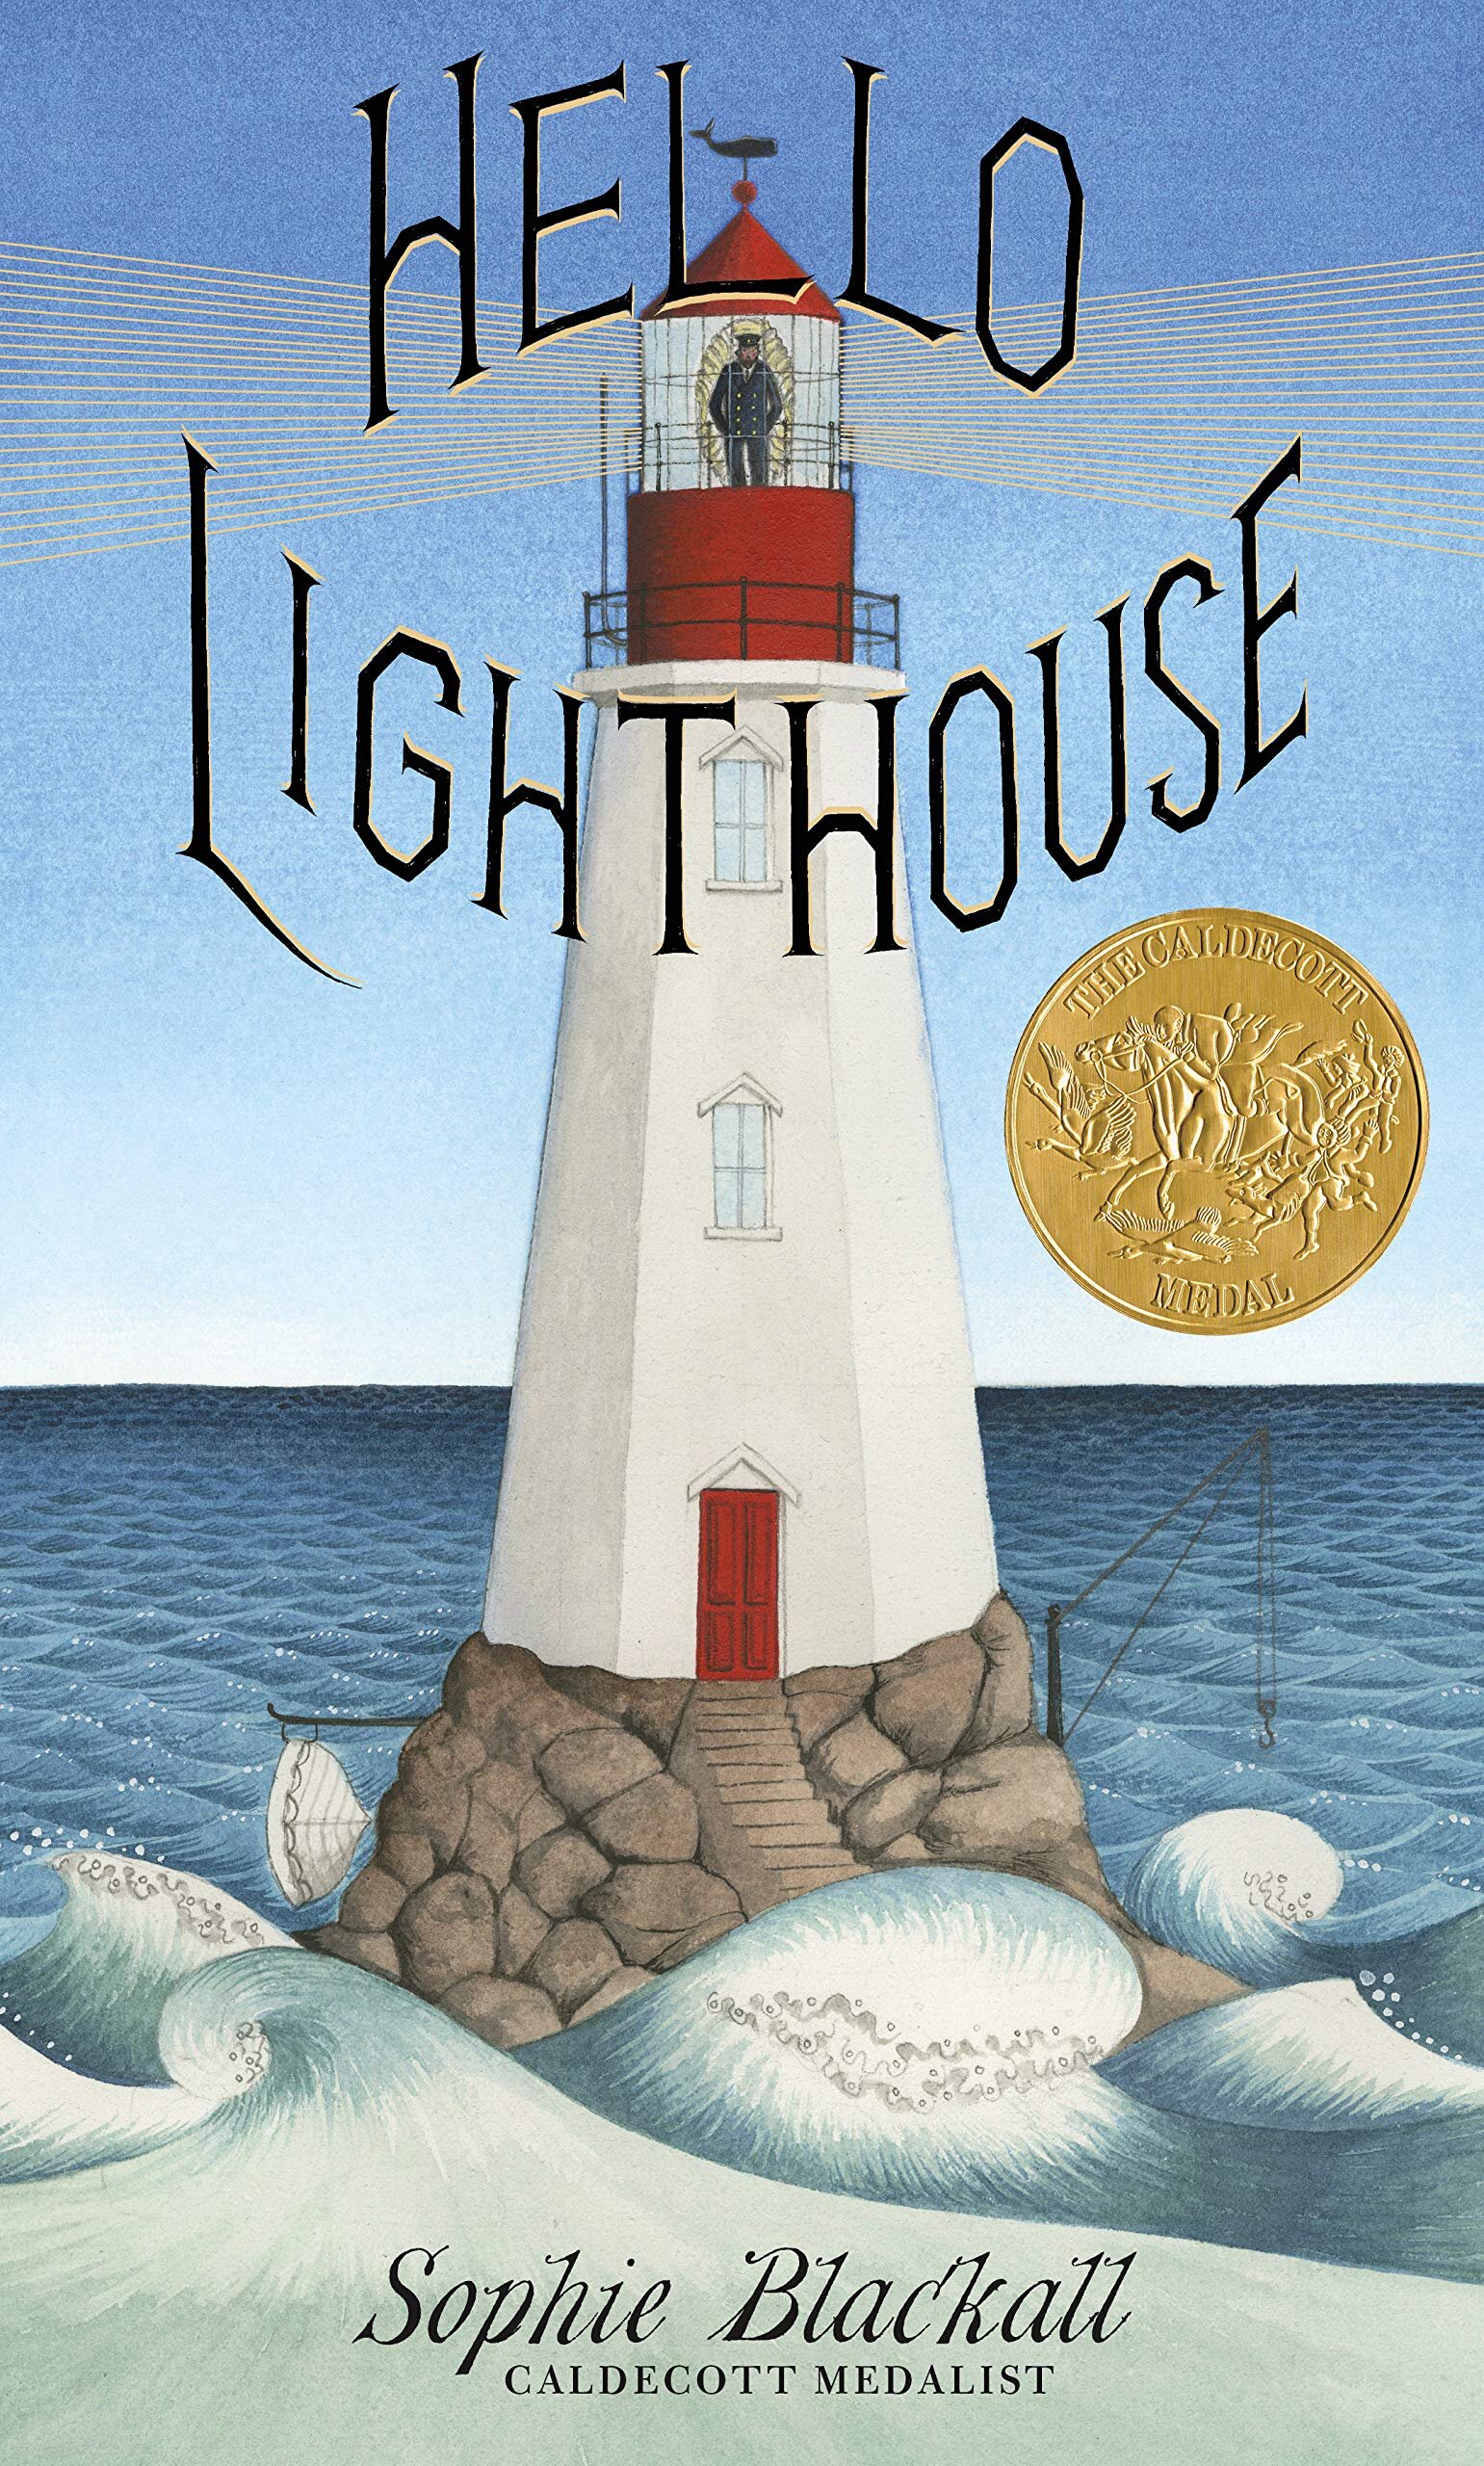 Hello Lighthouse – Sophie Blackhall 